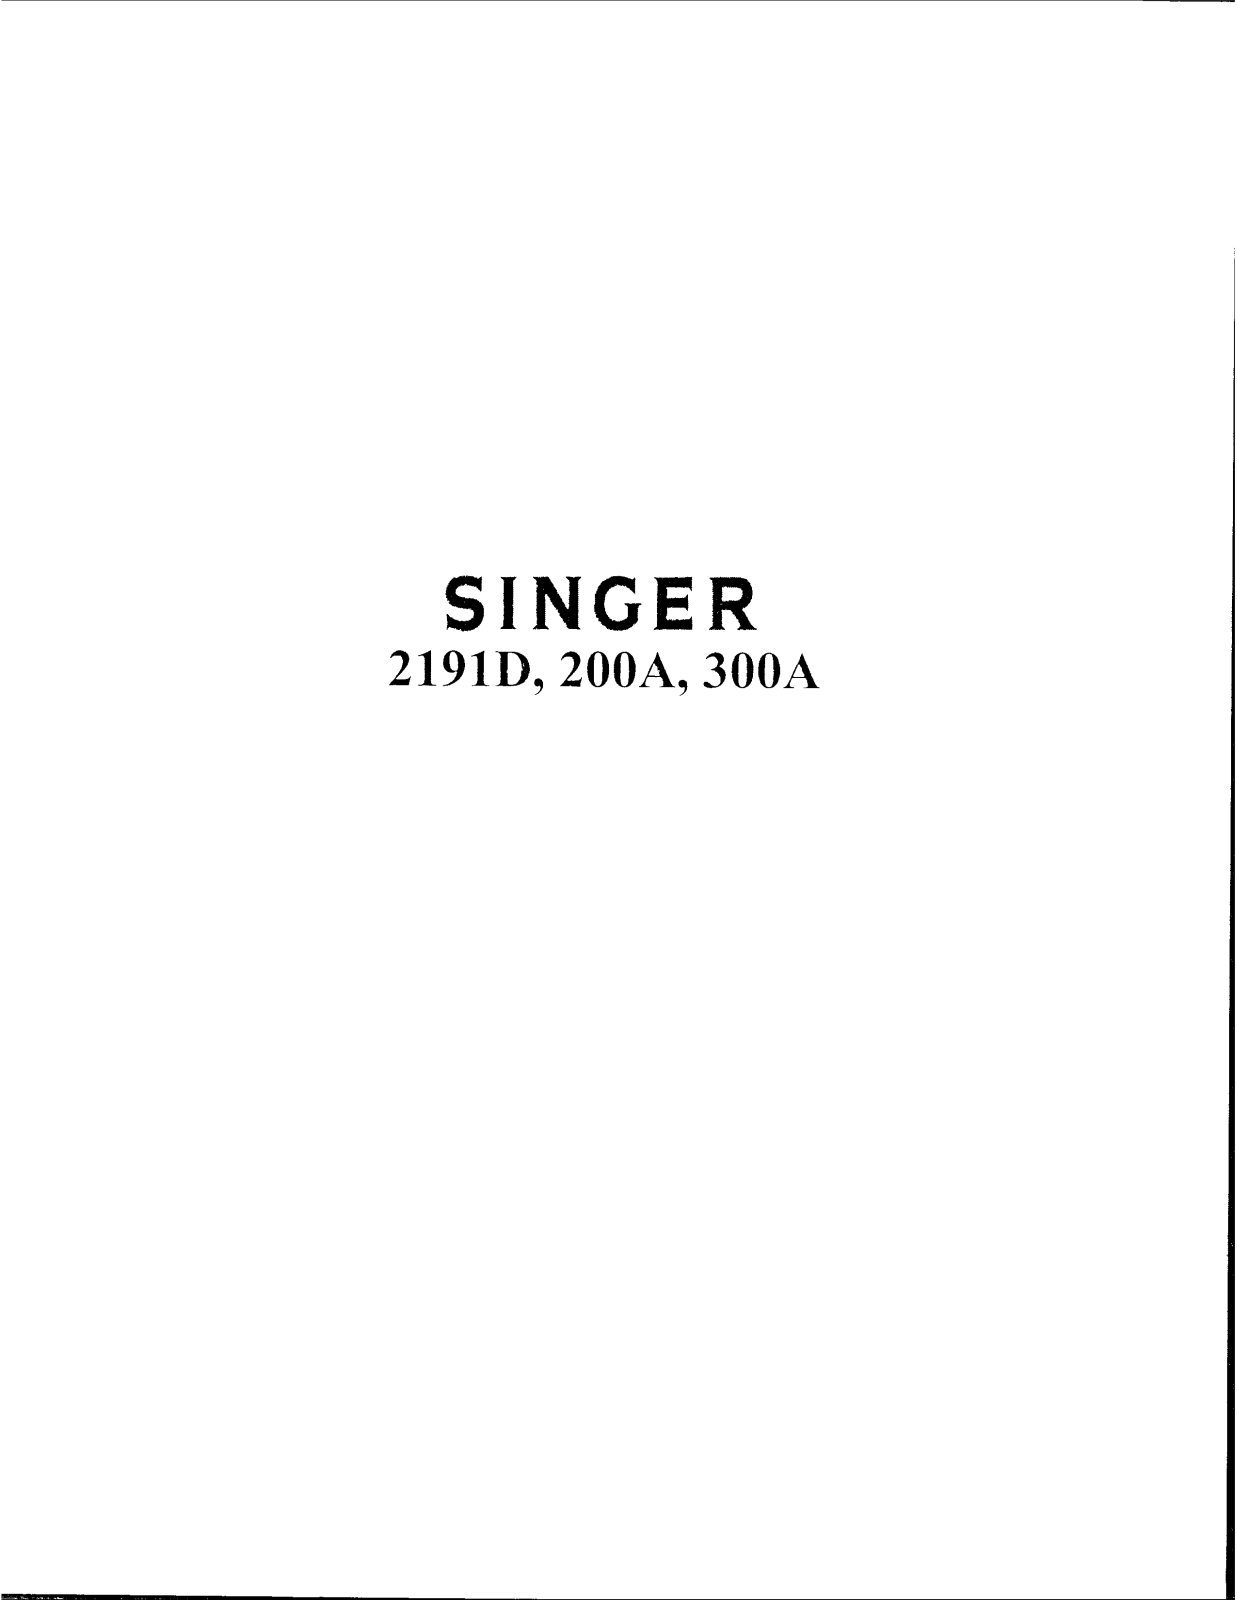 Singer 2191D, 200A, 300A Instruction Manual